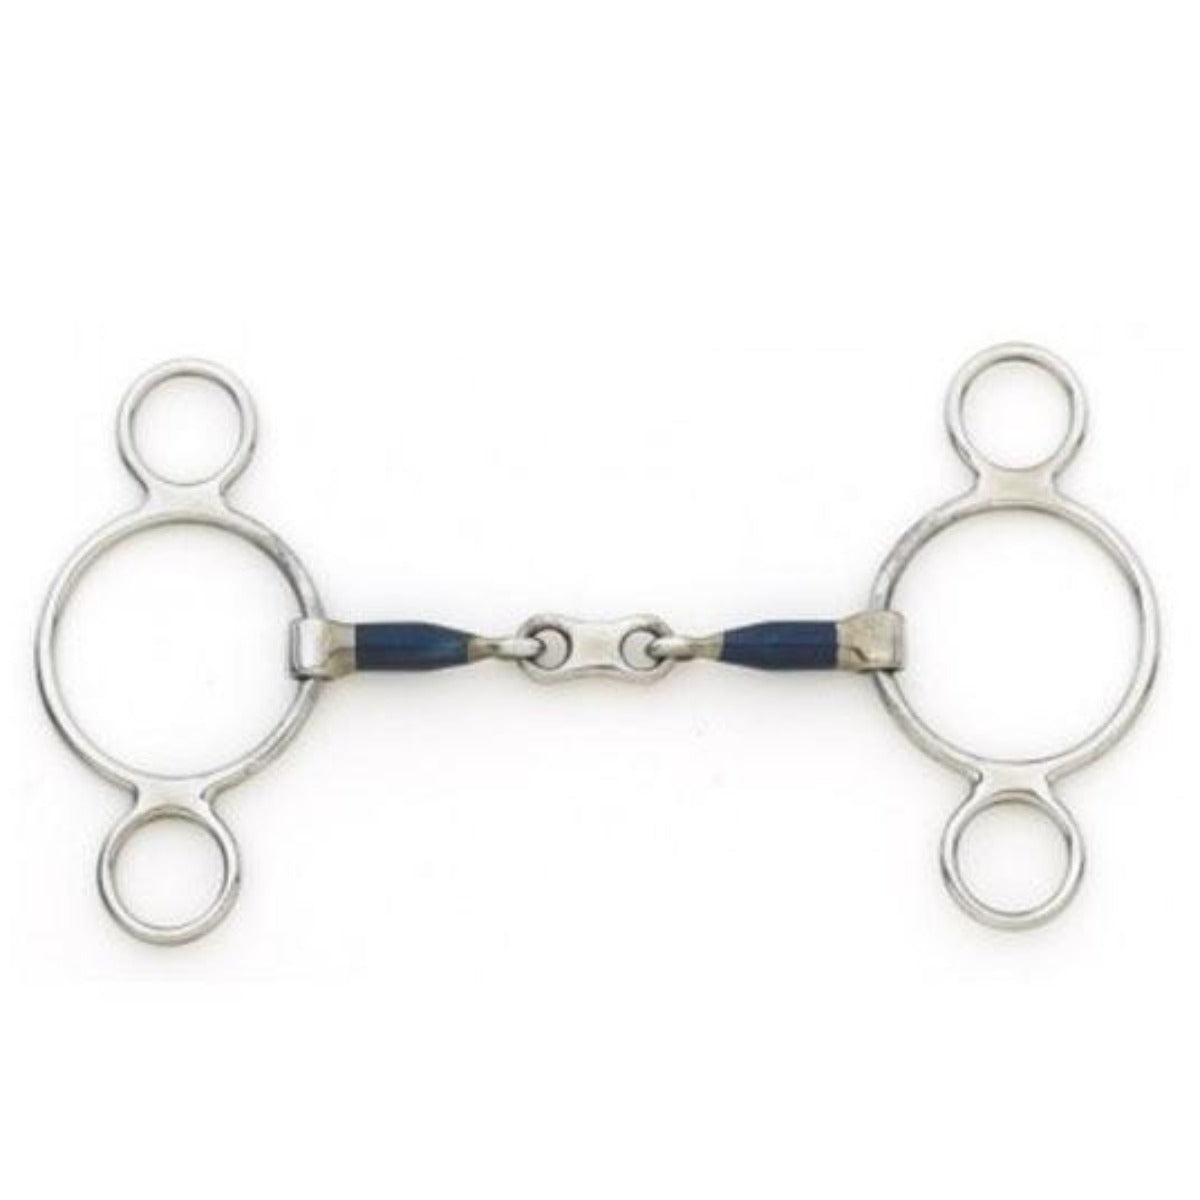 Centaur Blue Steel 2 Ring French Link Gag Bit